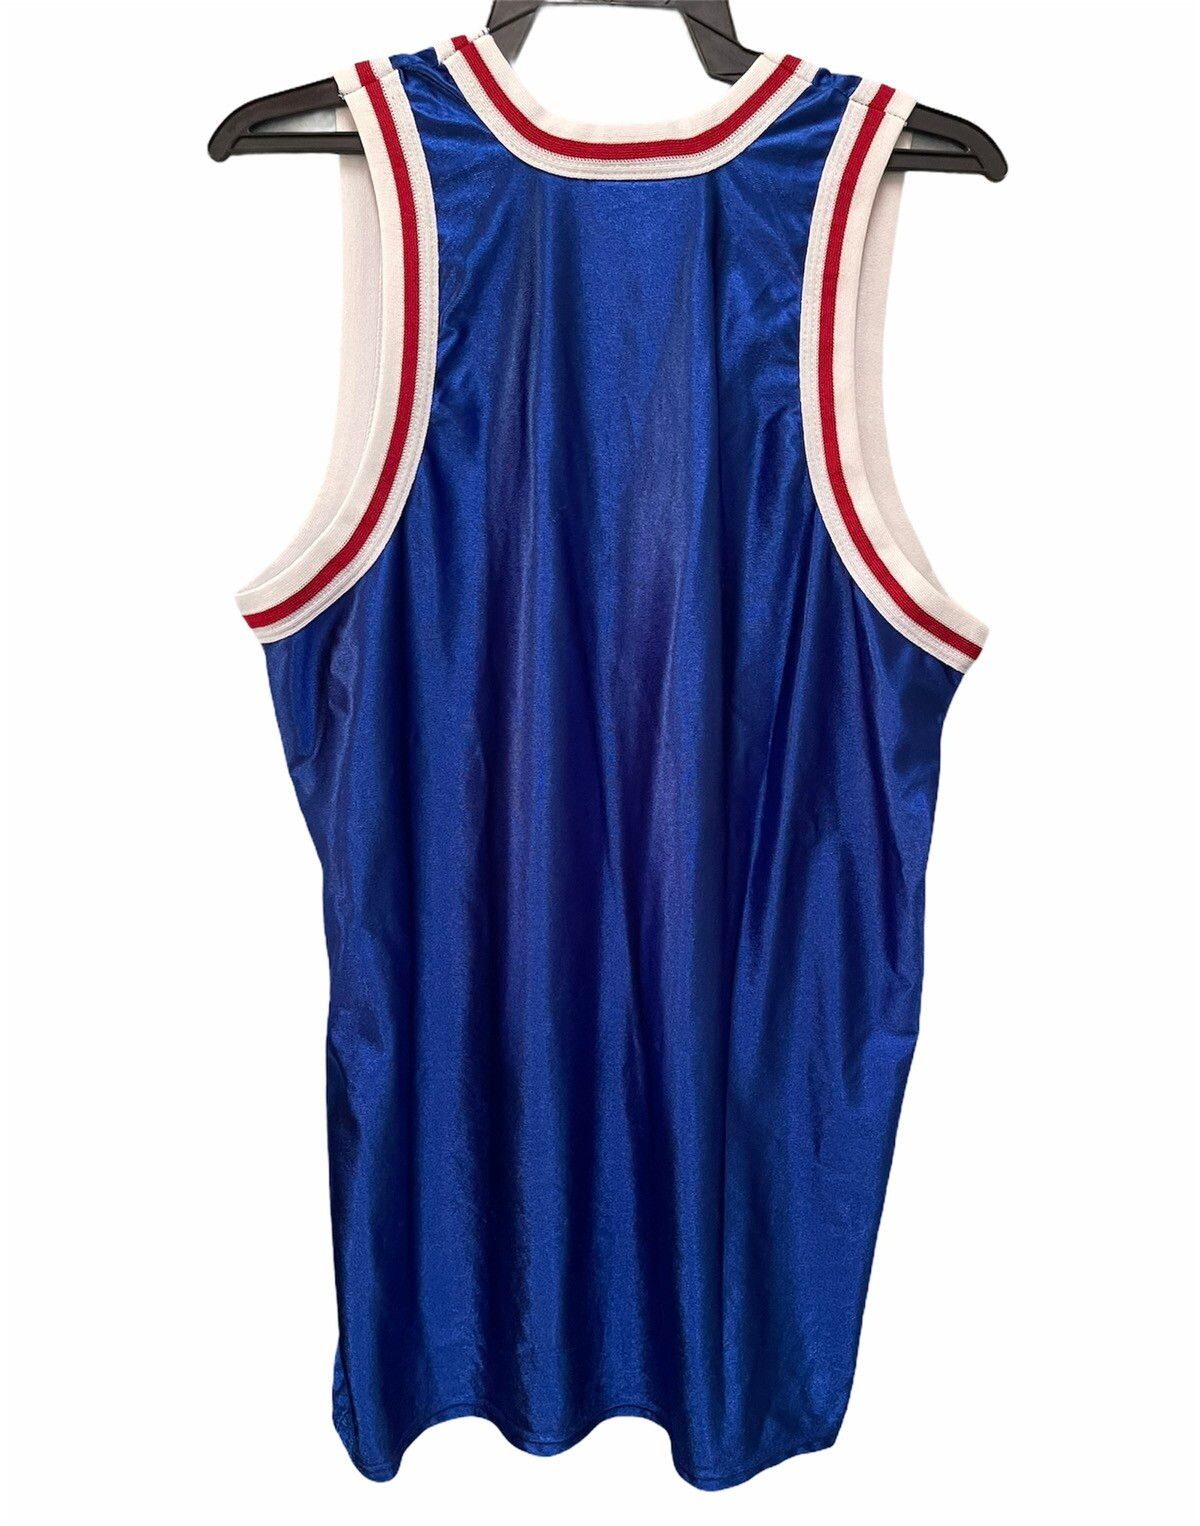 Vintage Madball 357 NYC basketball jersey - 2